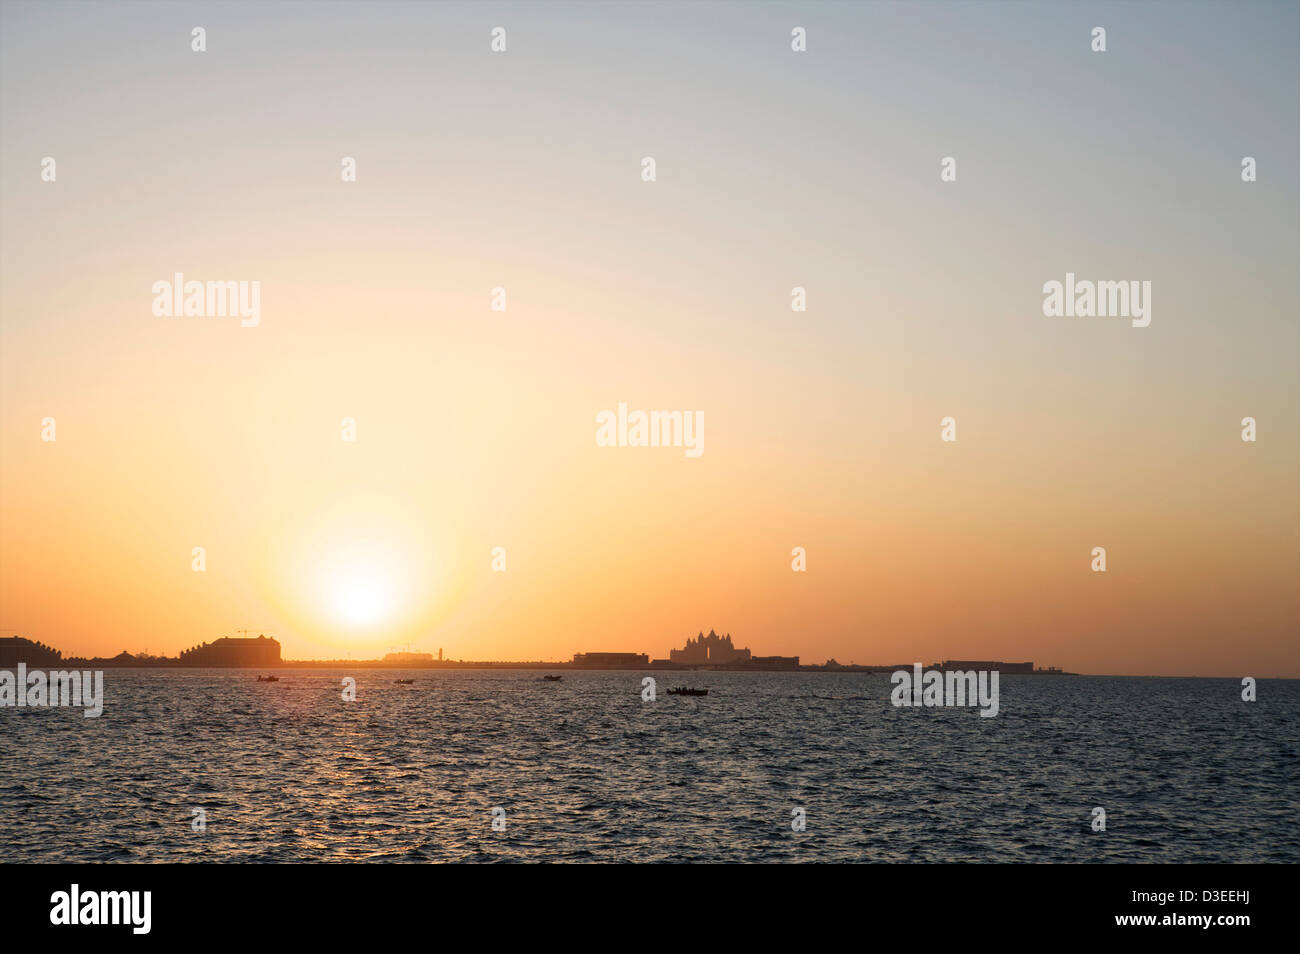 Il Dubai skyline occidentale dominata dal Palm Atlantis Hotel al tramonto Foto Stock